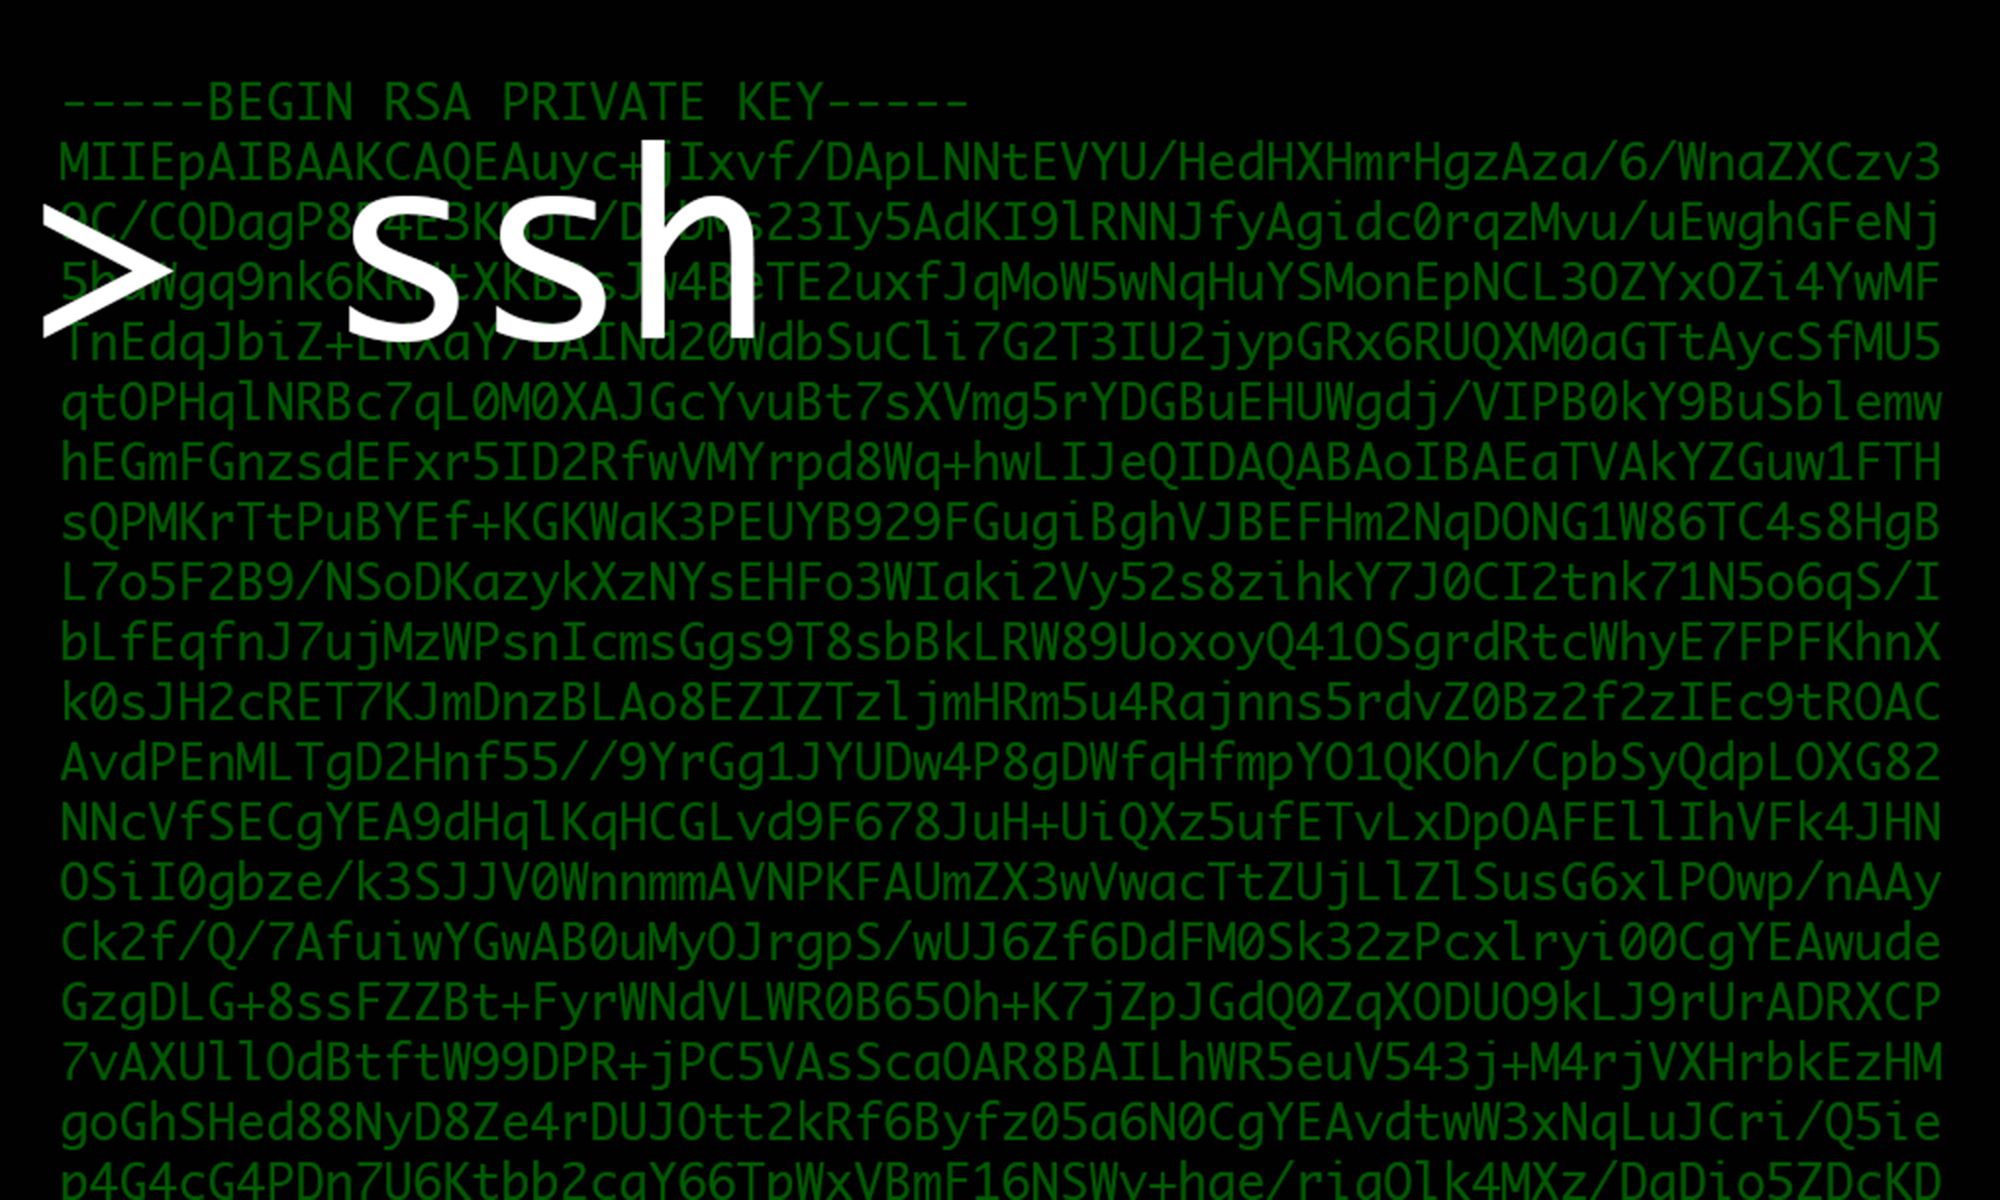 Generating and using new SSH keys